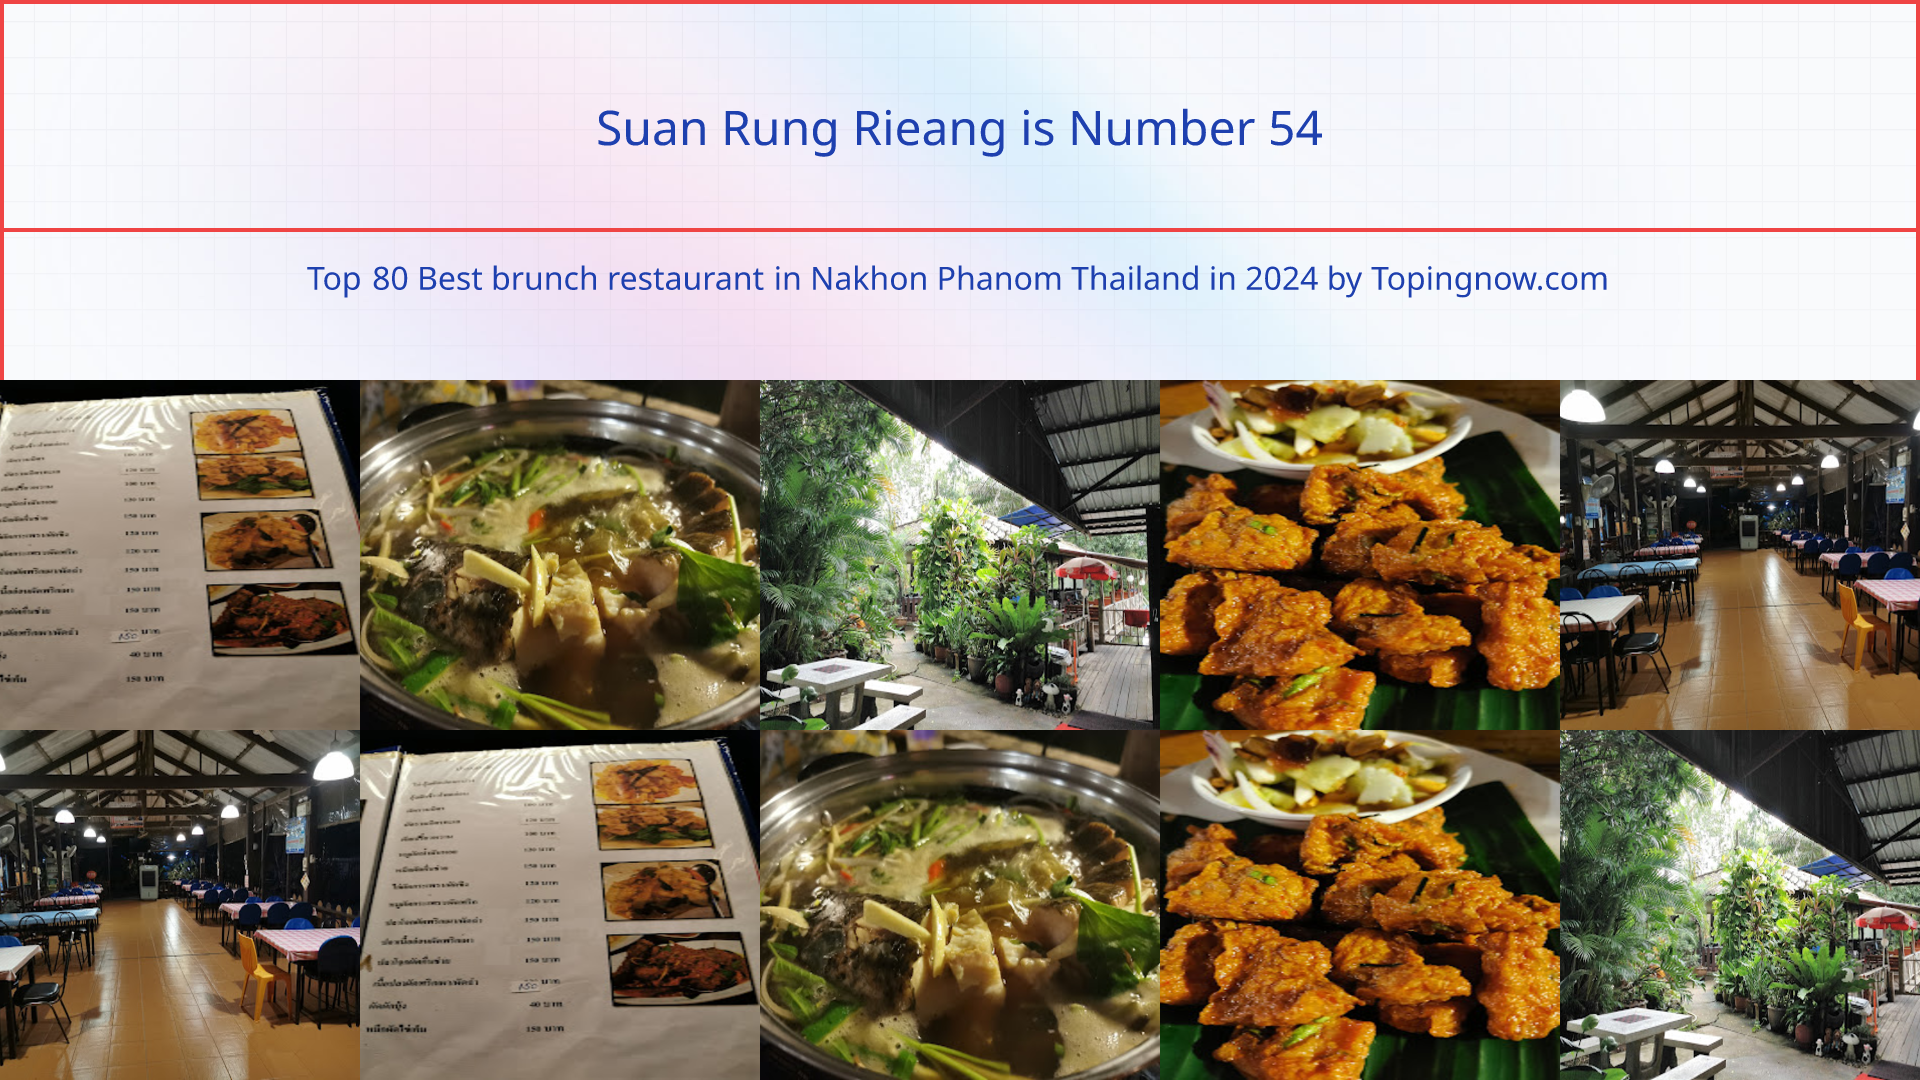 Suan Rung Rieang: Top 80 Best brunch restaurant in Nakhon Phanom Thailand in 2024